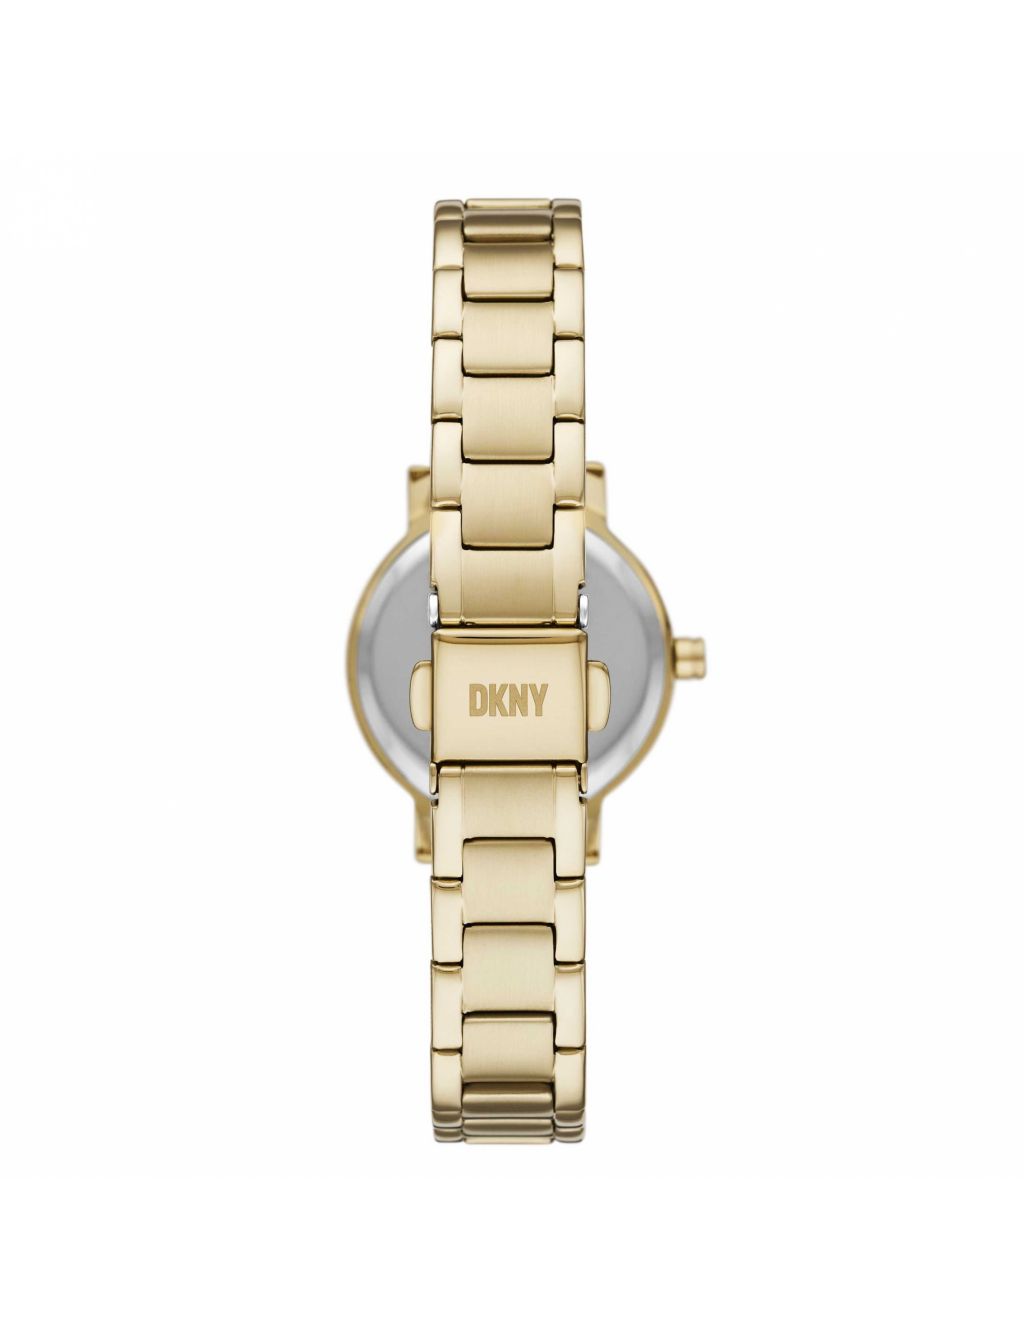 DKNY Soho Metal Bracelet Watch image 4